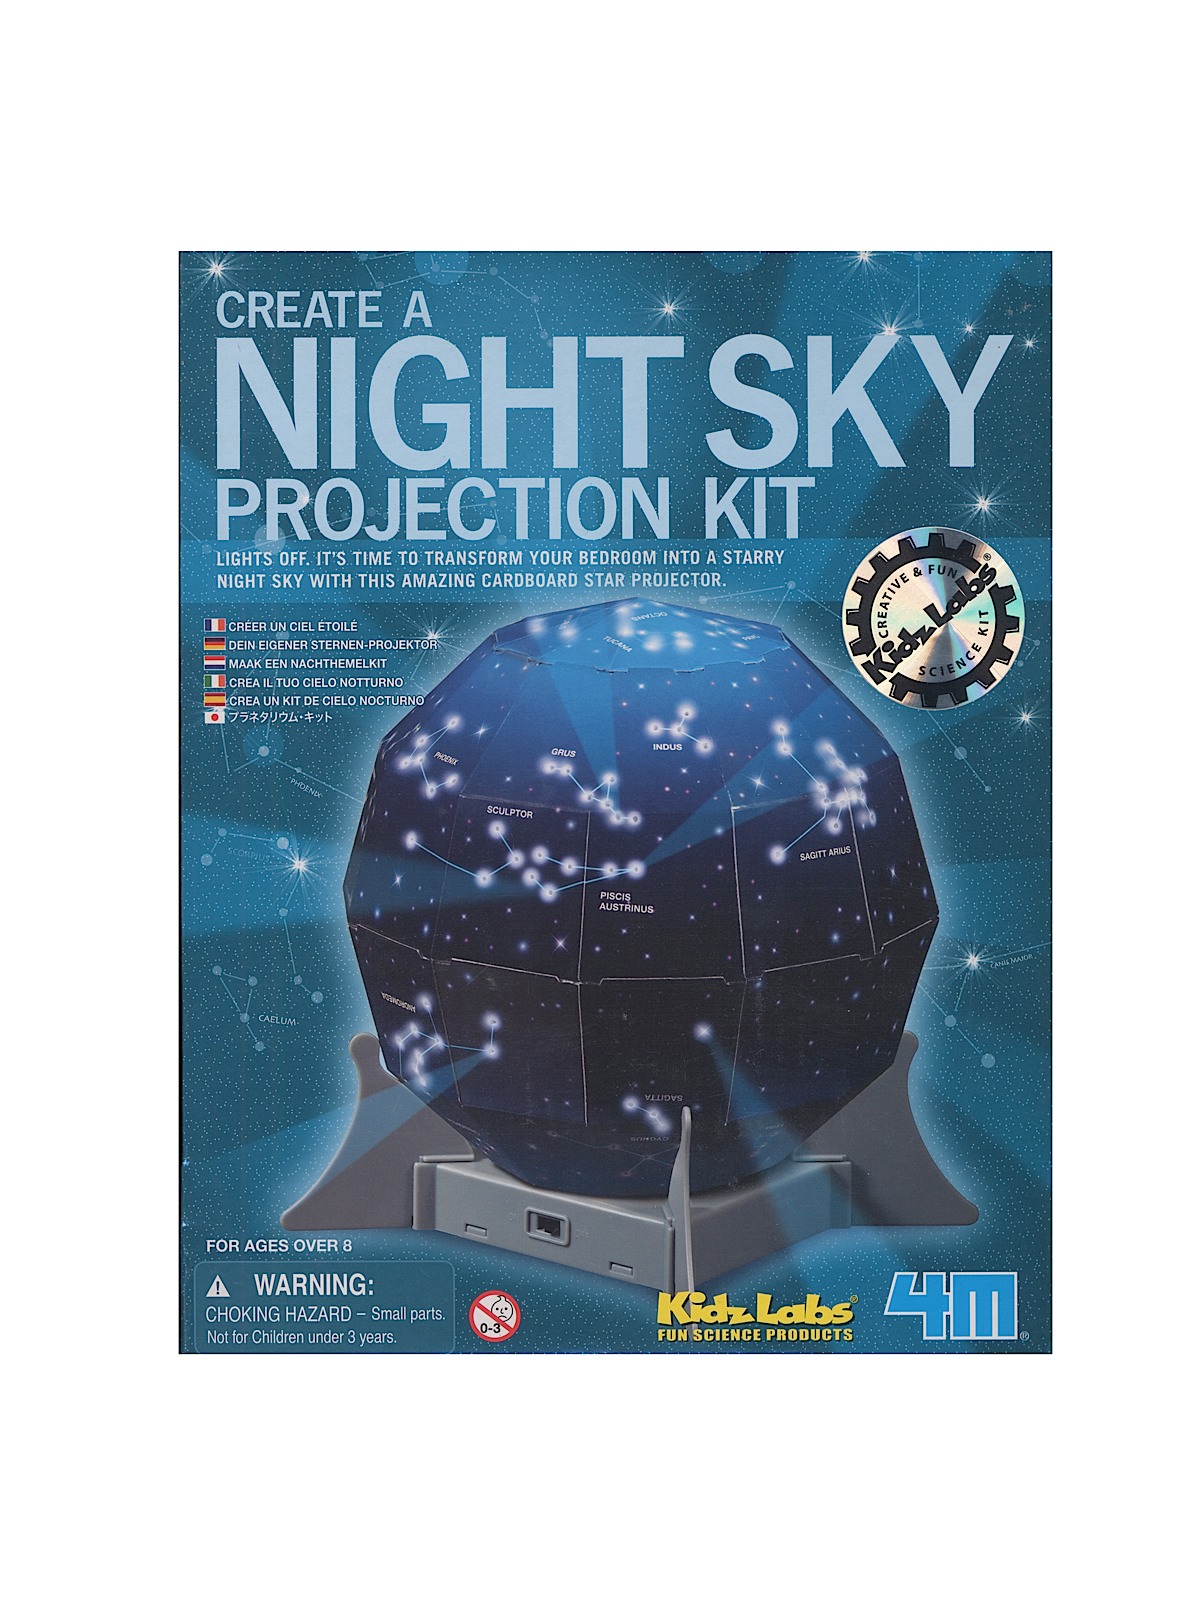 Kidzlabs Night Sky Projection Kit Each